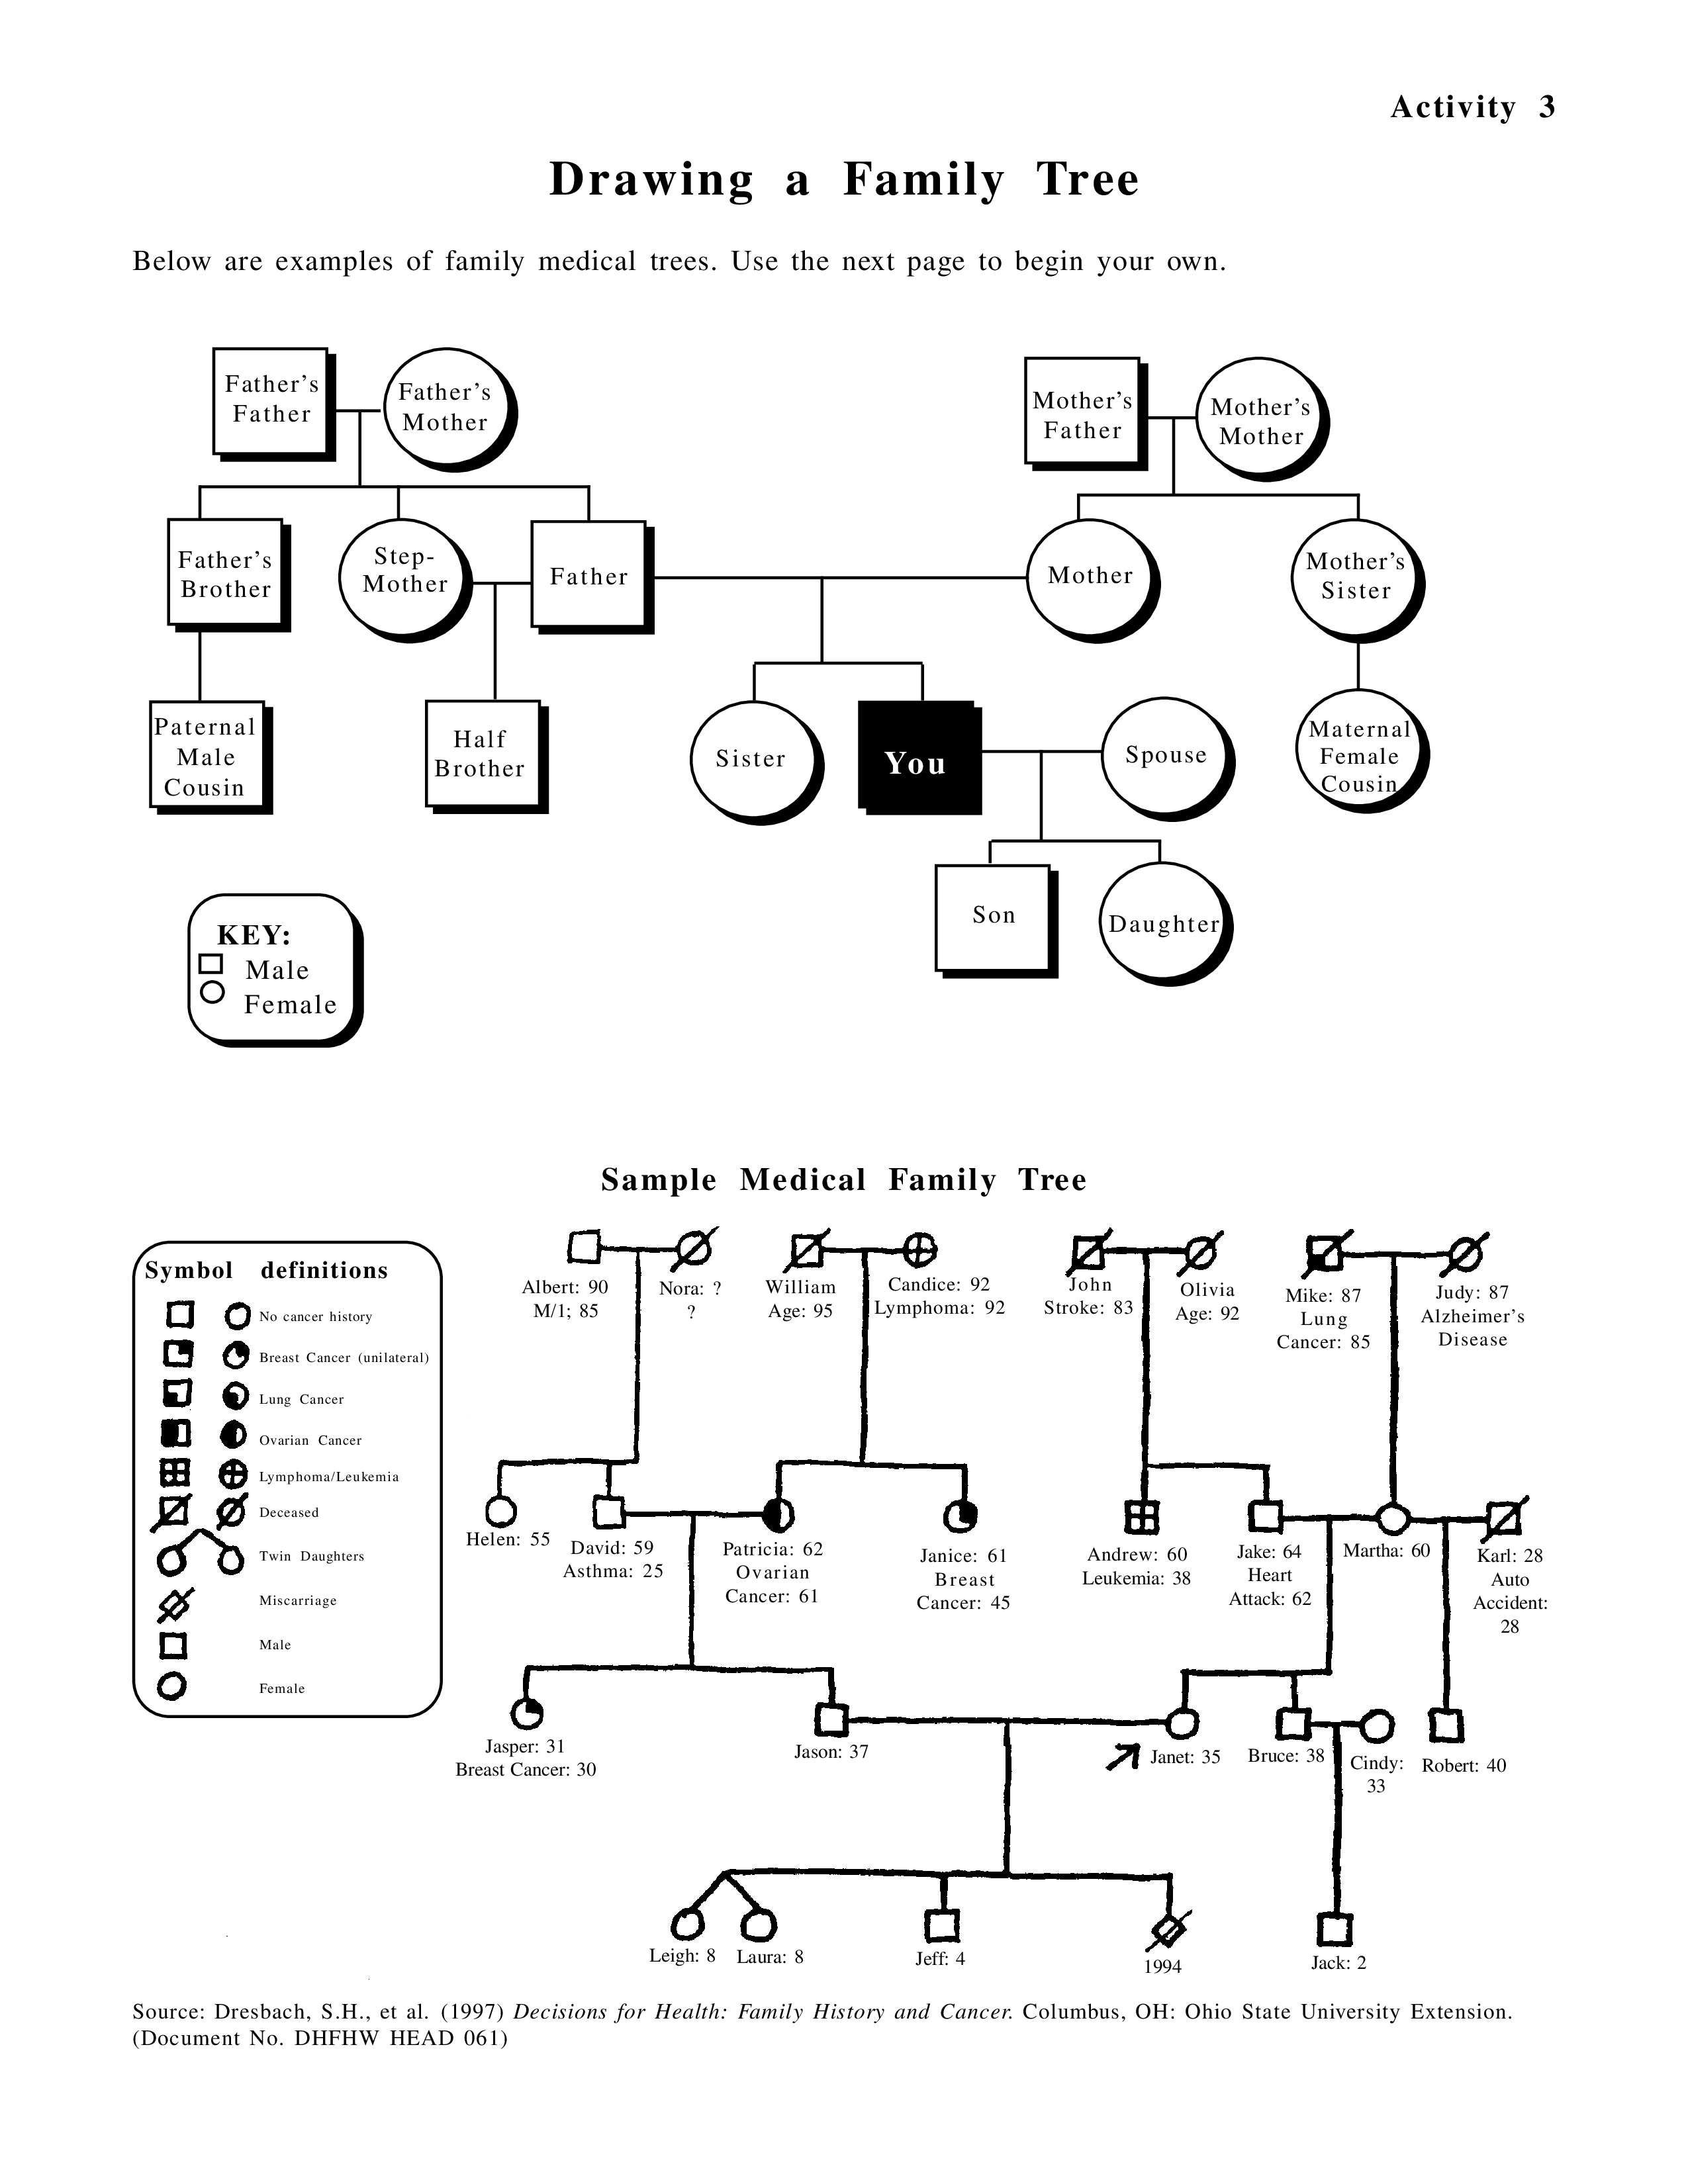 Medical Family Tree Sample main image